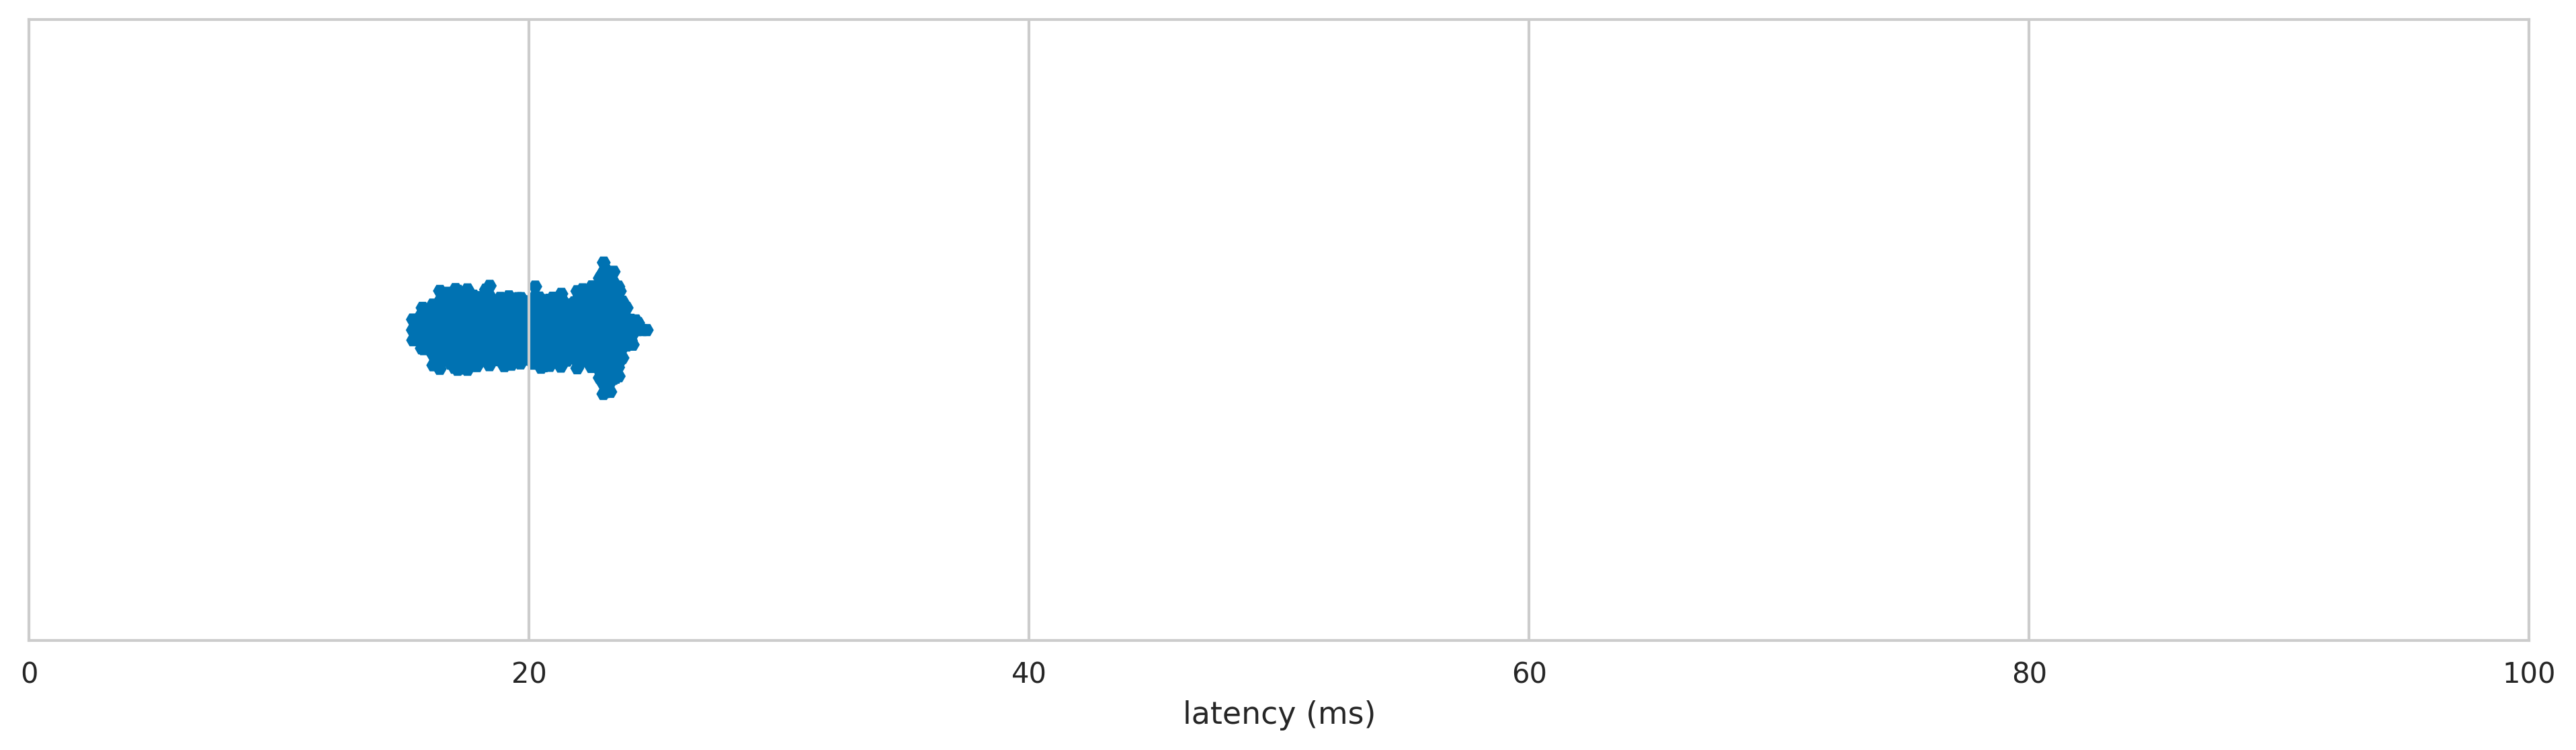 Sigma latency distribution 